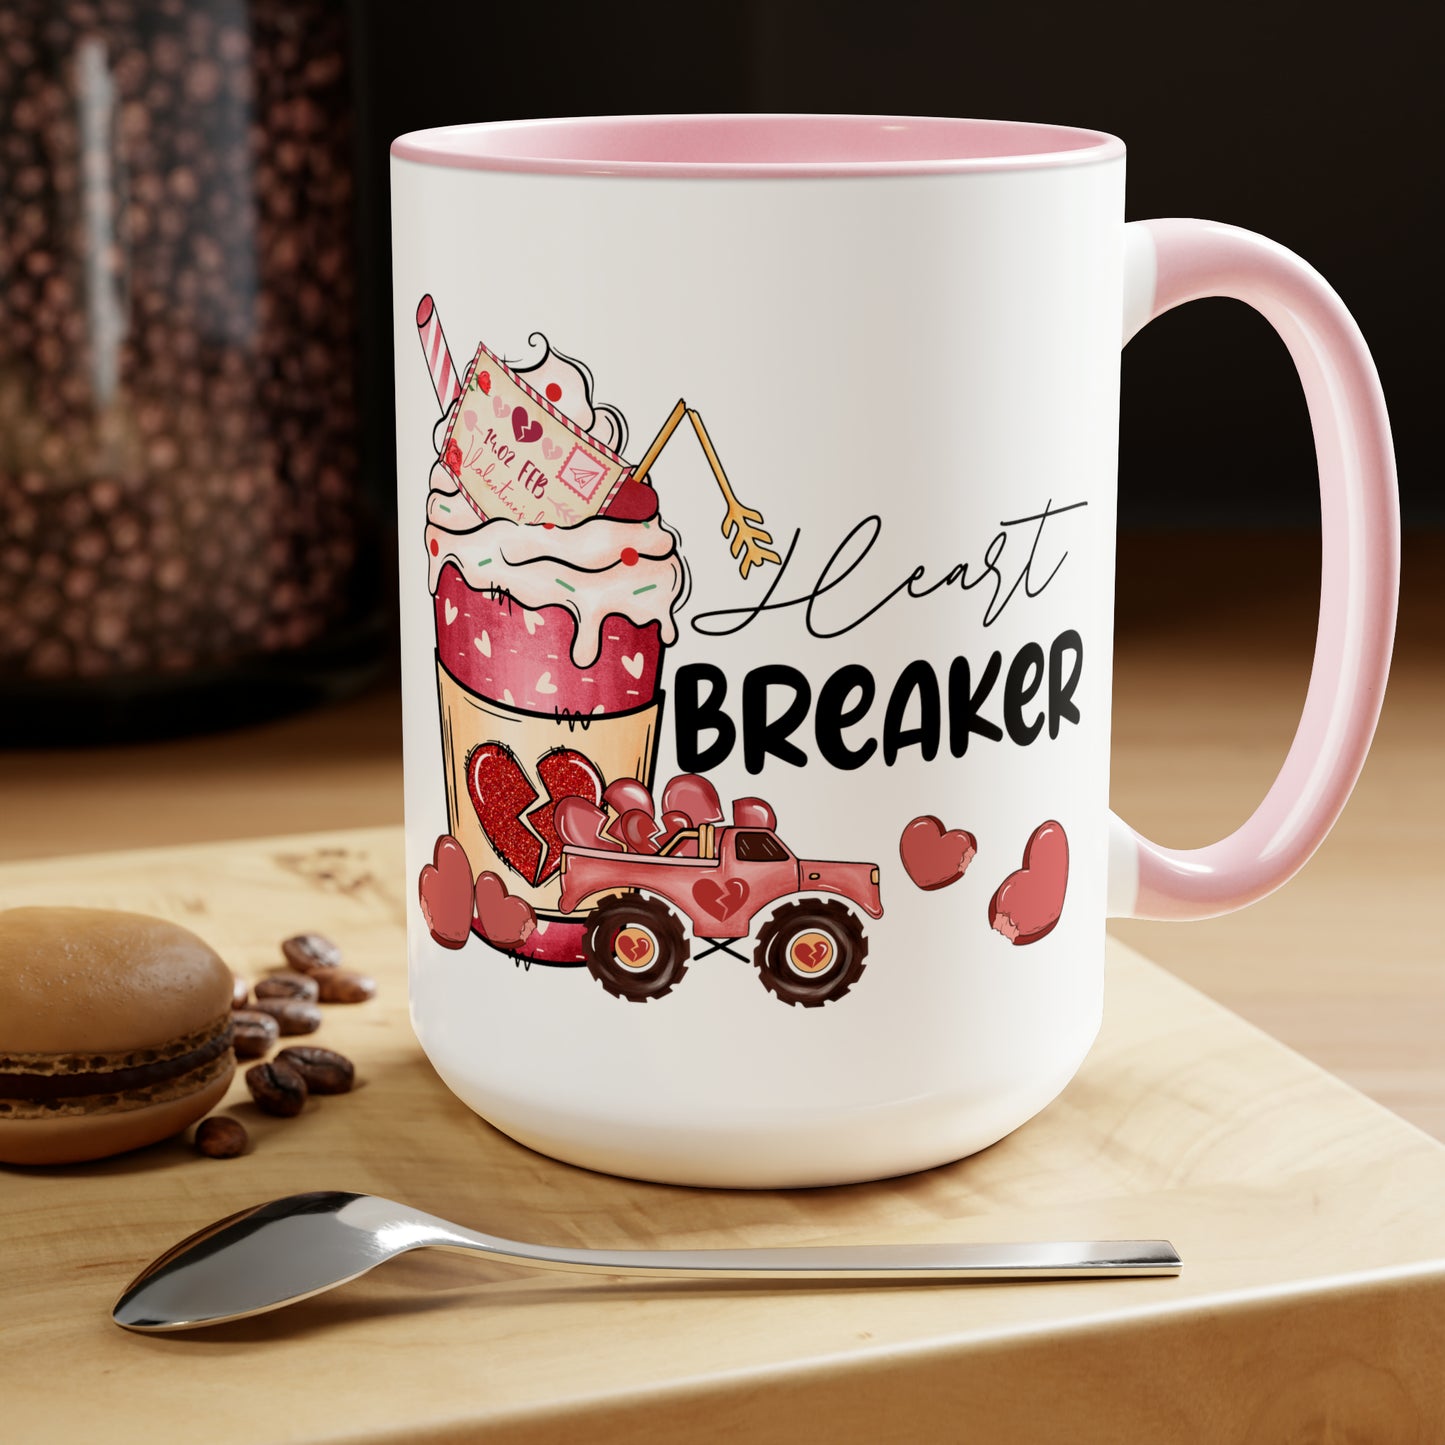 Heart Breaker Two-Tone Coffee Mug, 15oz Printify Pikolelie (pee-koh-lay-lee) Activewear Mug